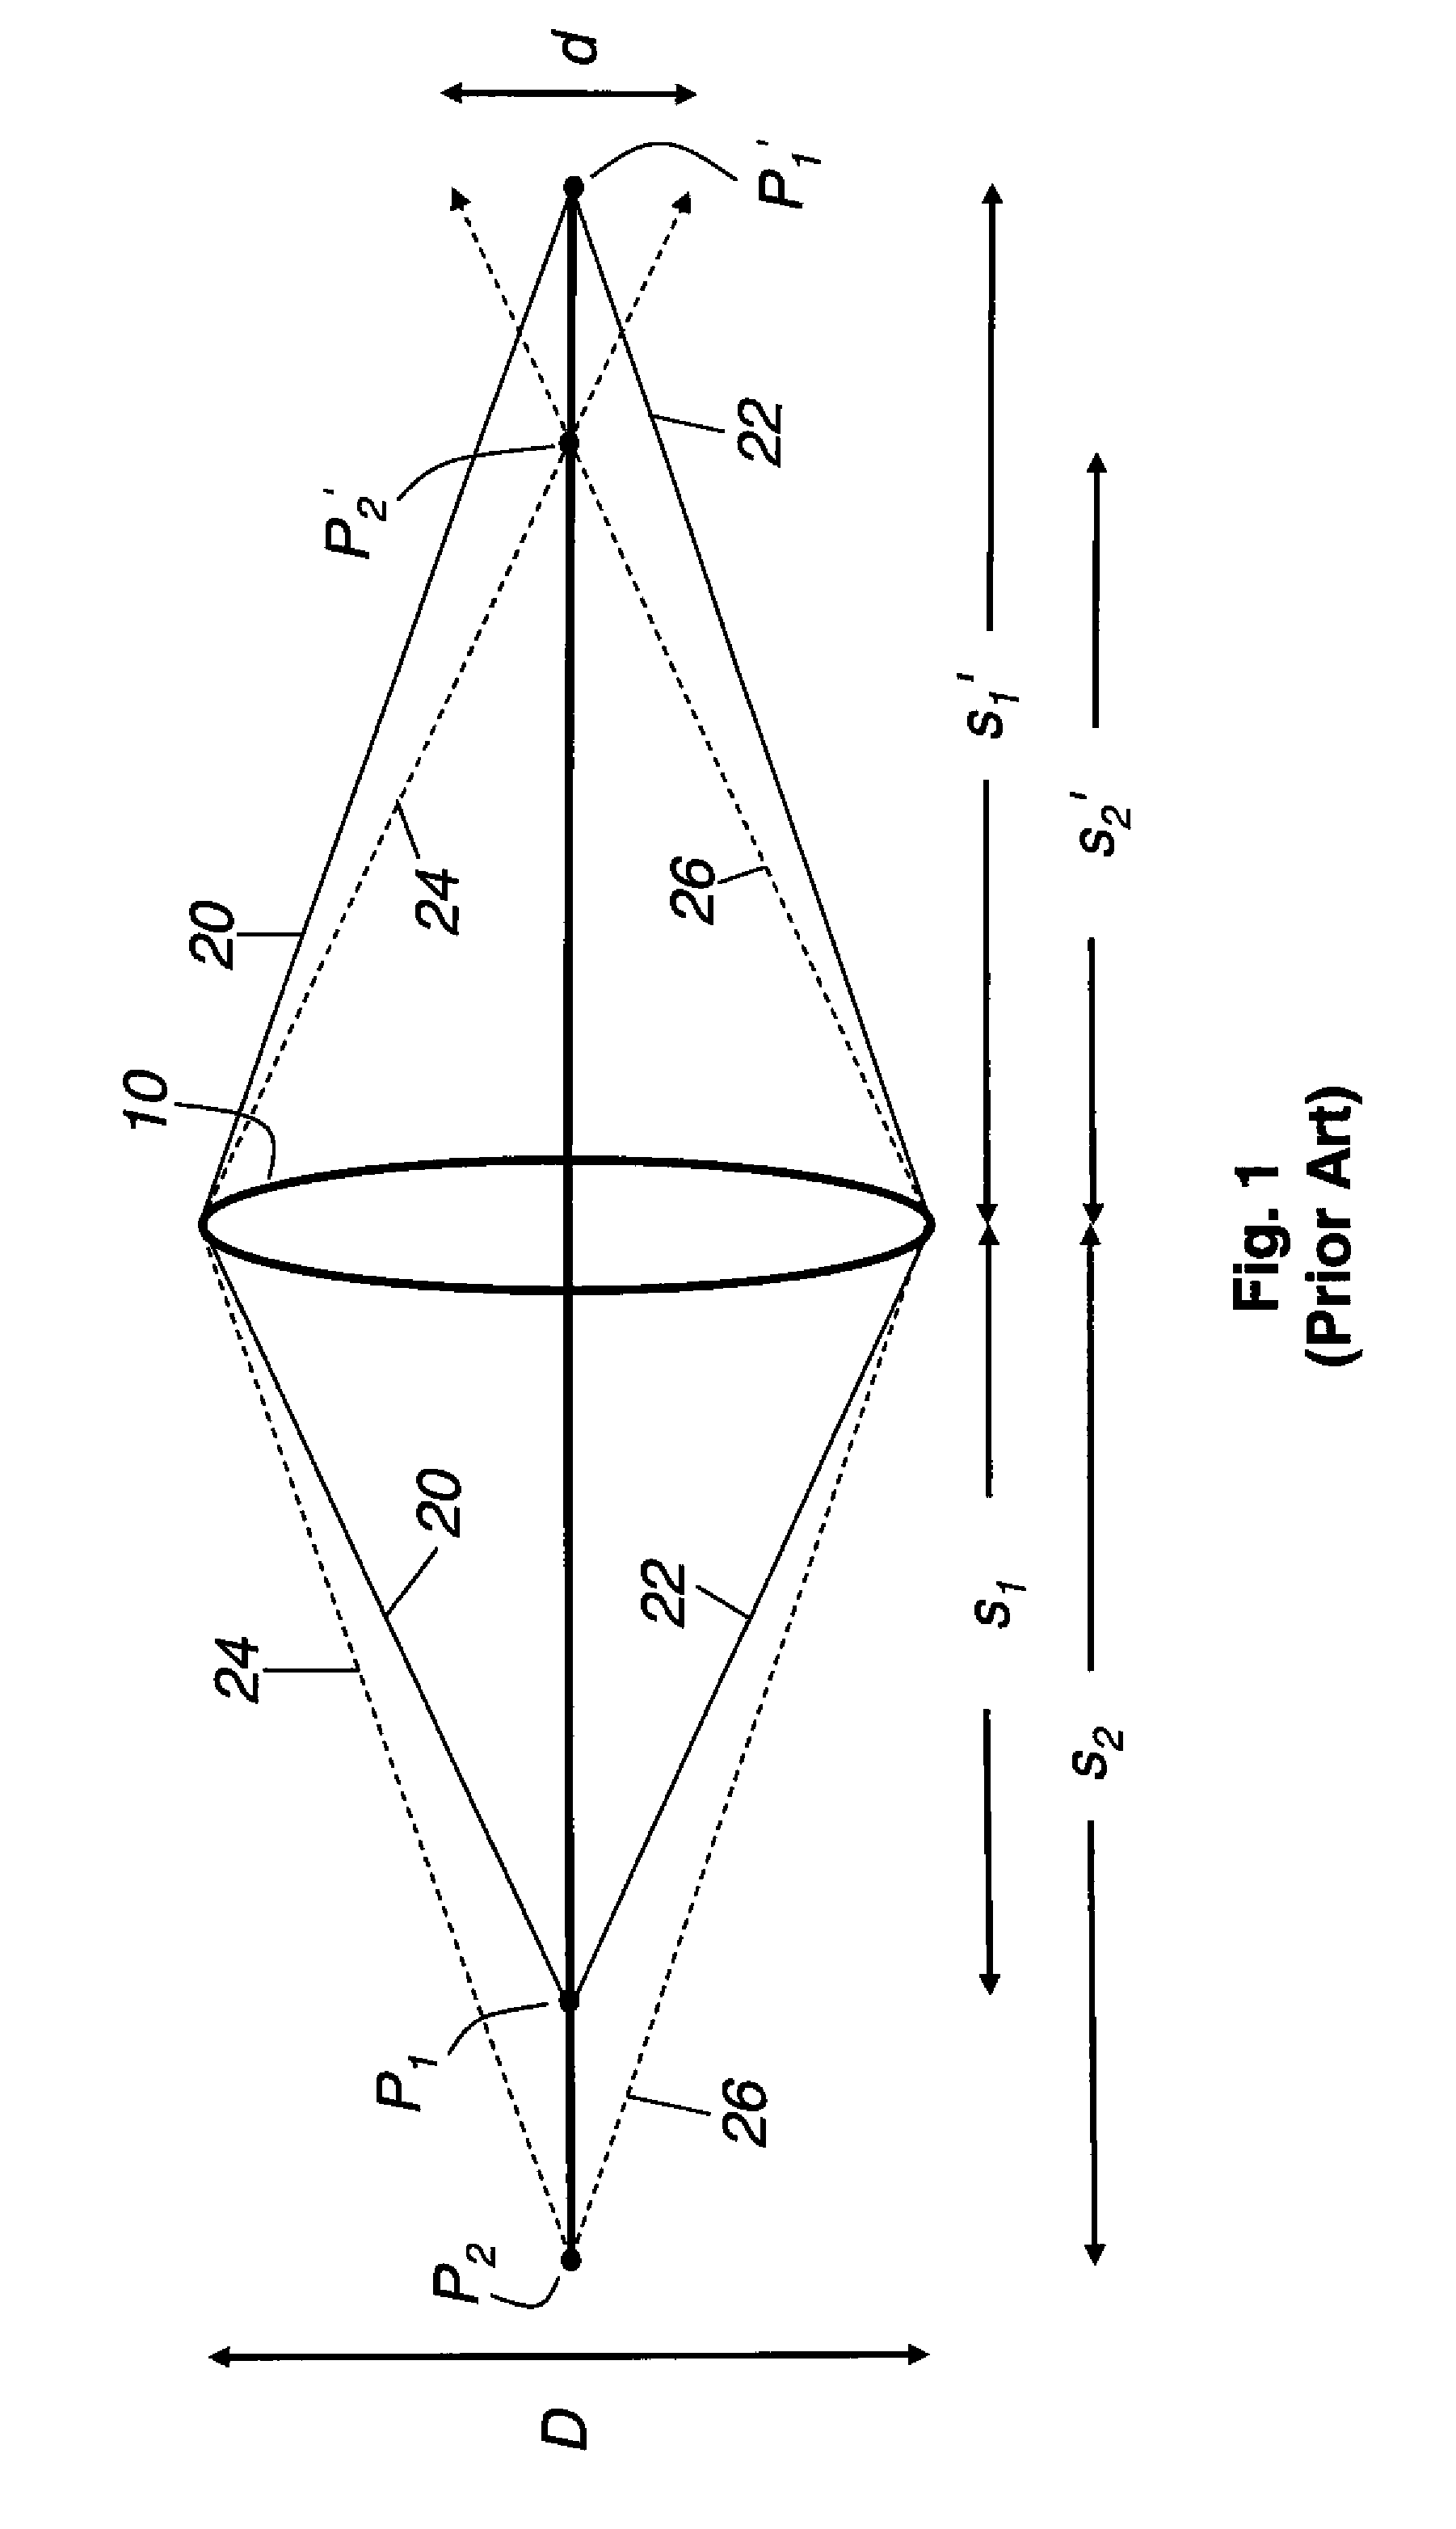 Range measurement using symmetric coded apertures